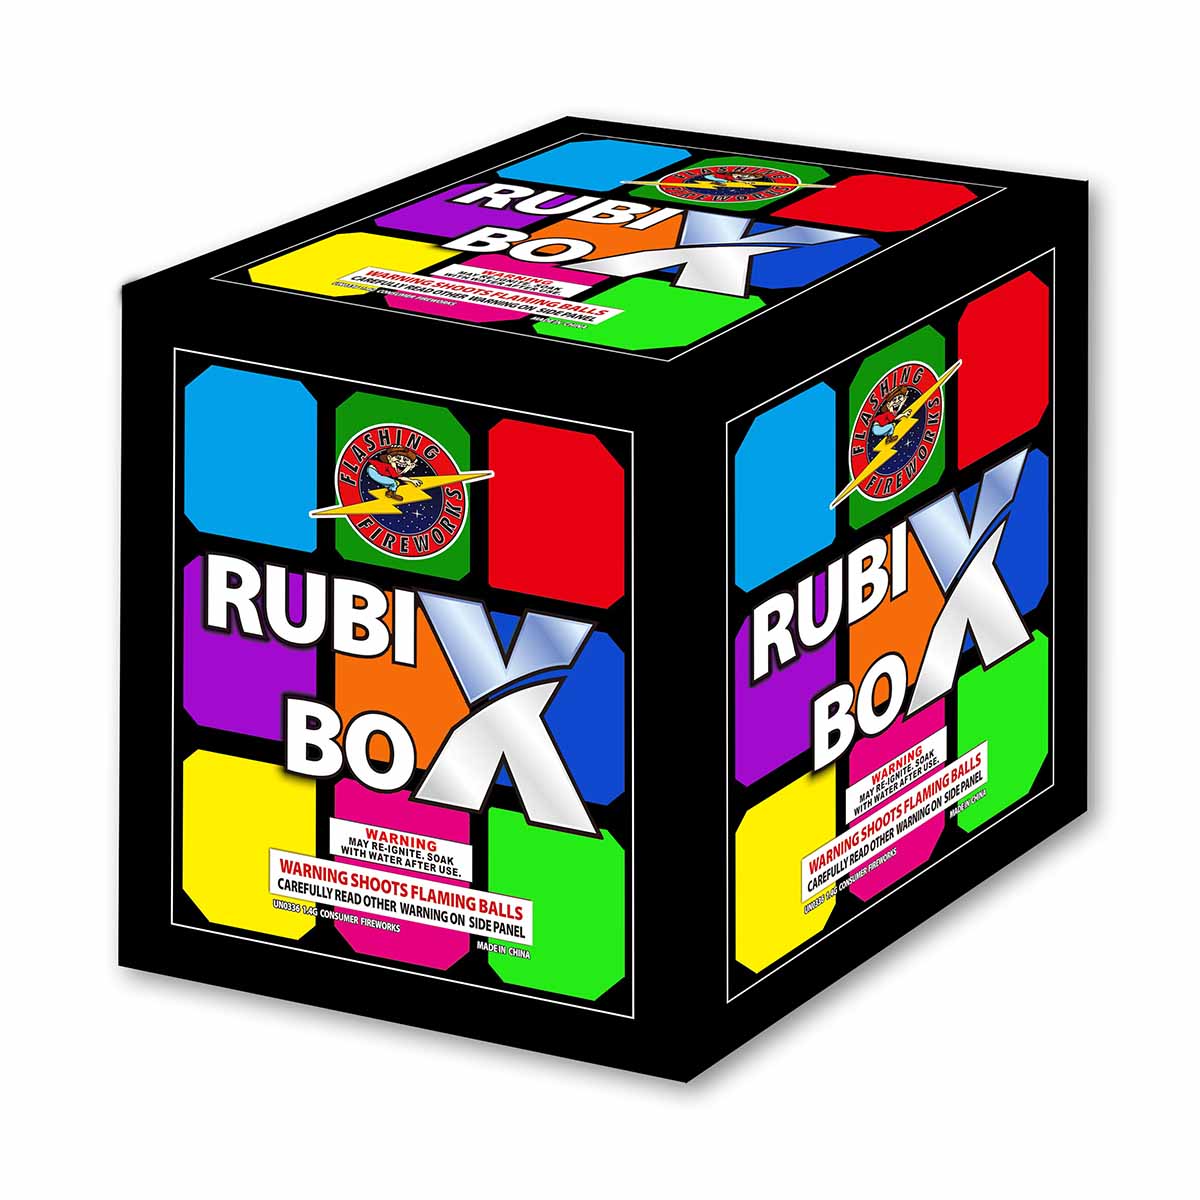 Rubix Box by Flashing Fireworks